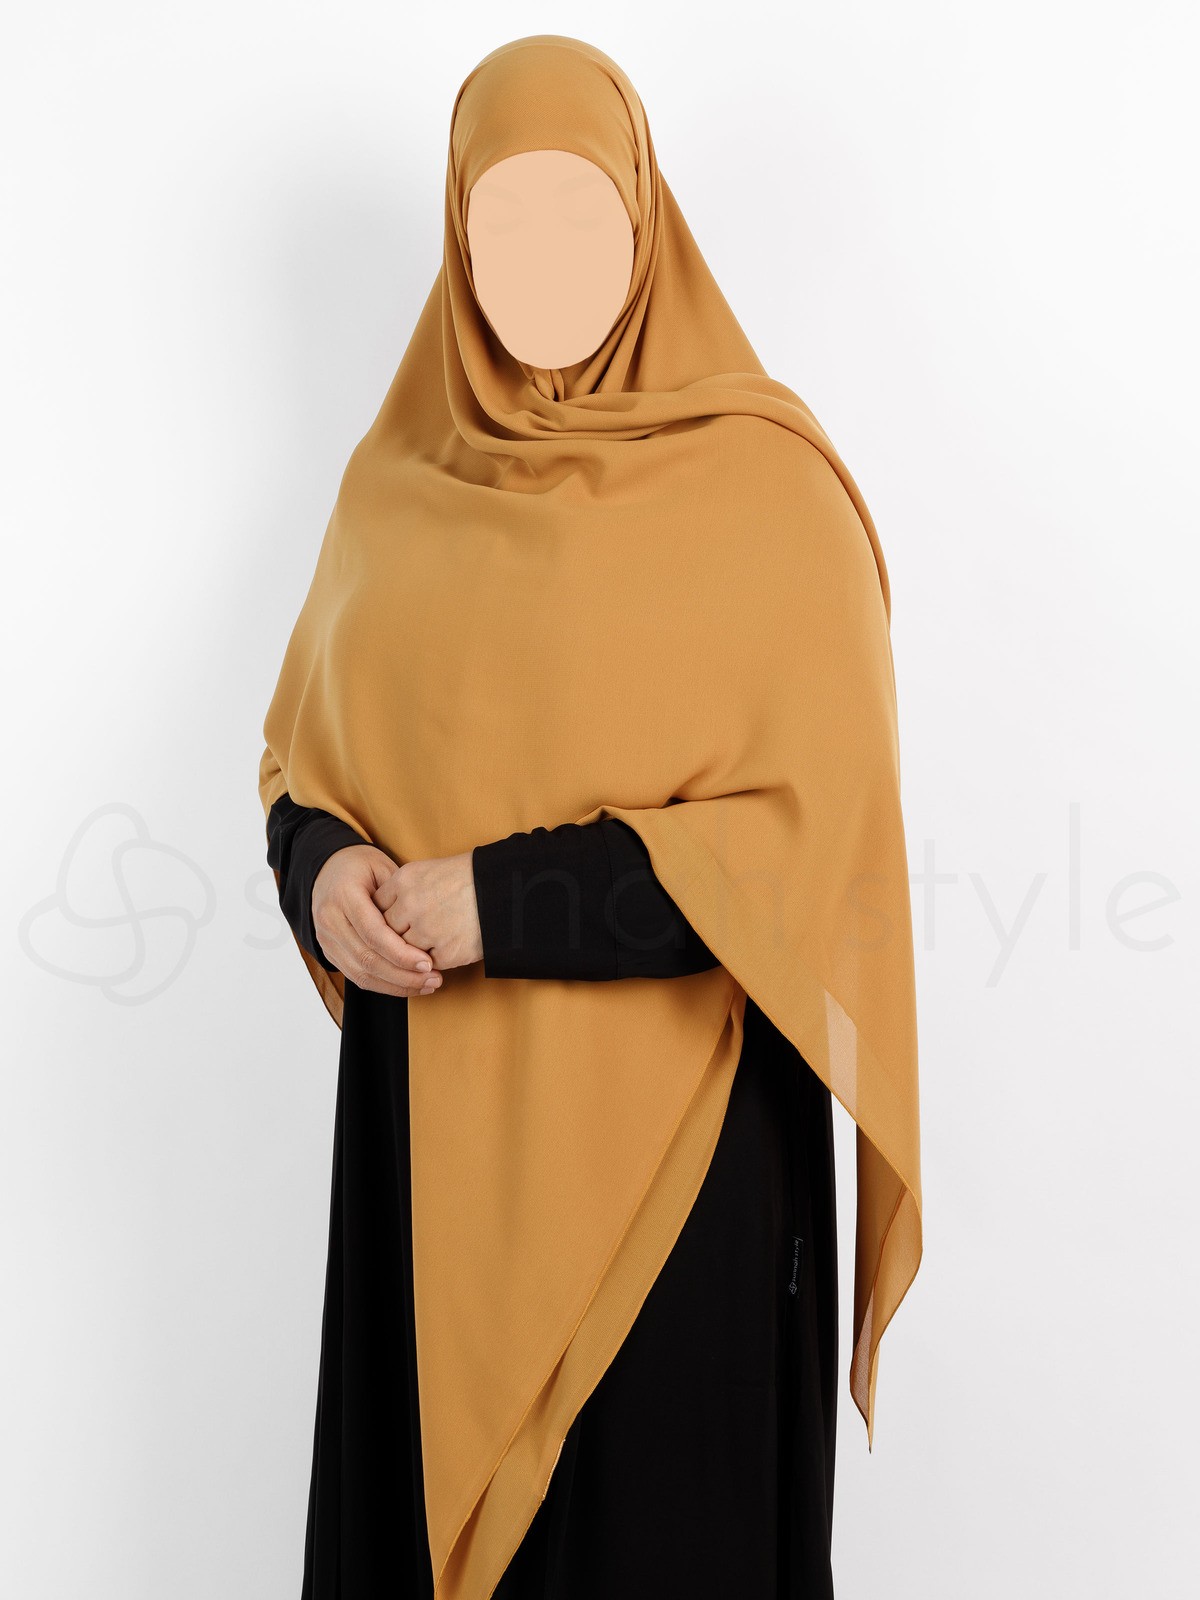 Sunnah Style - Essentials Square Hijab (Premium Chiffon) - XL (Honey)